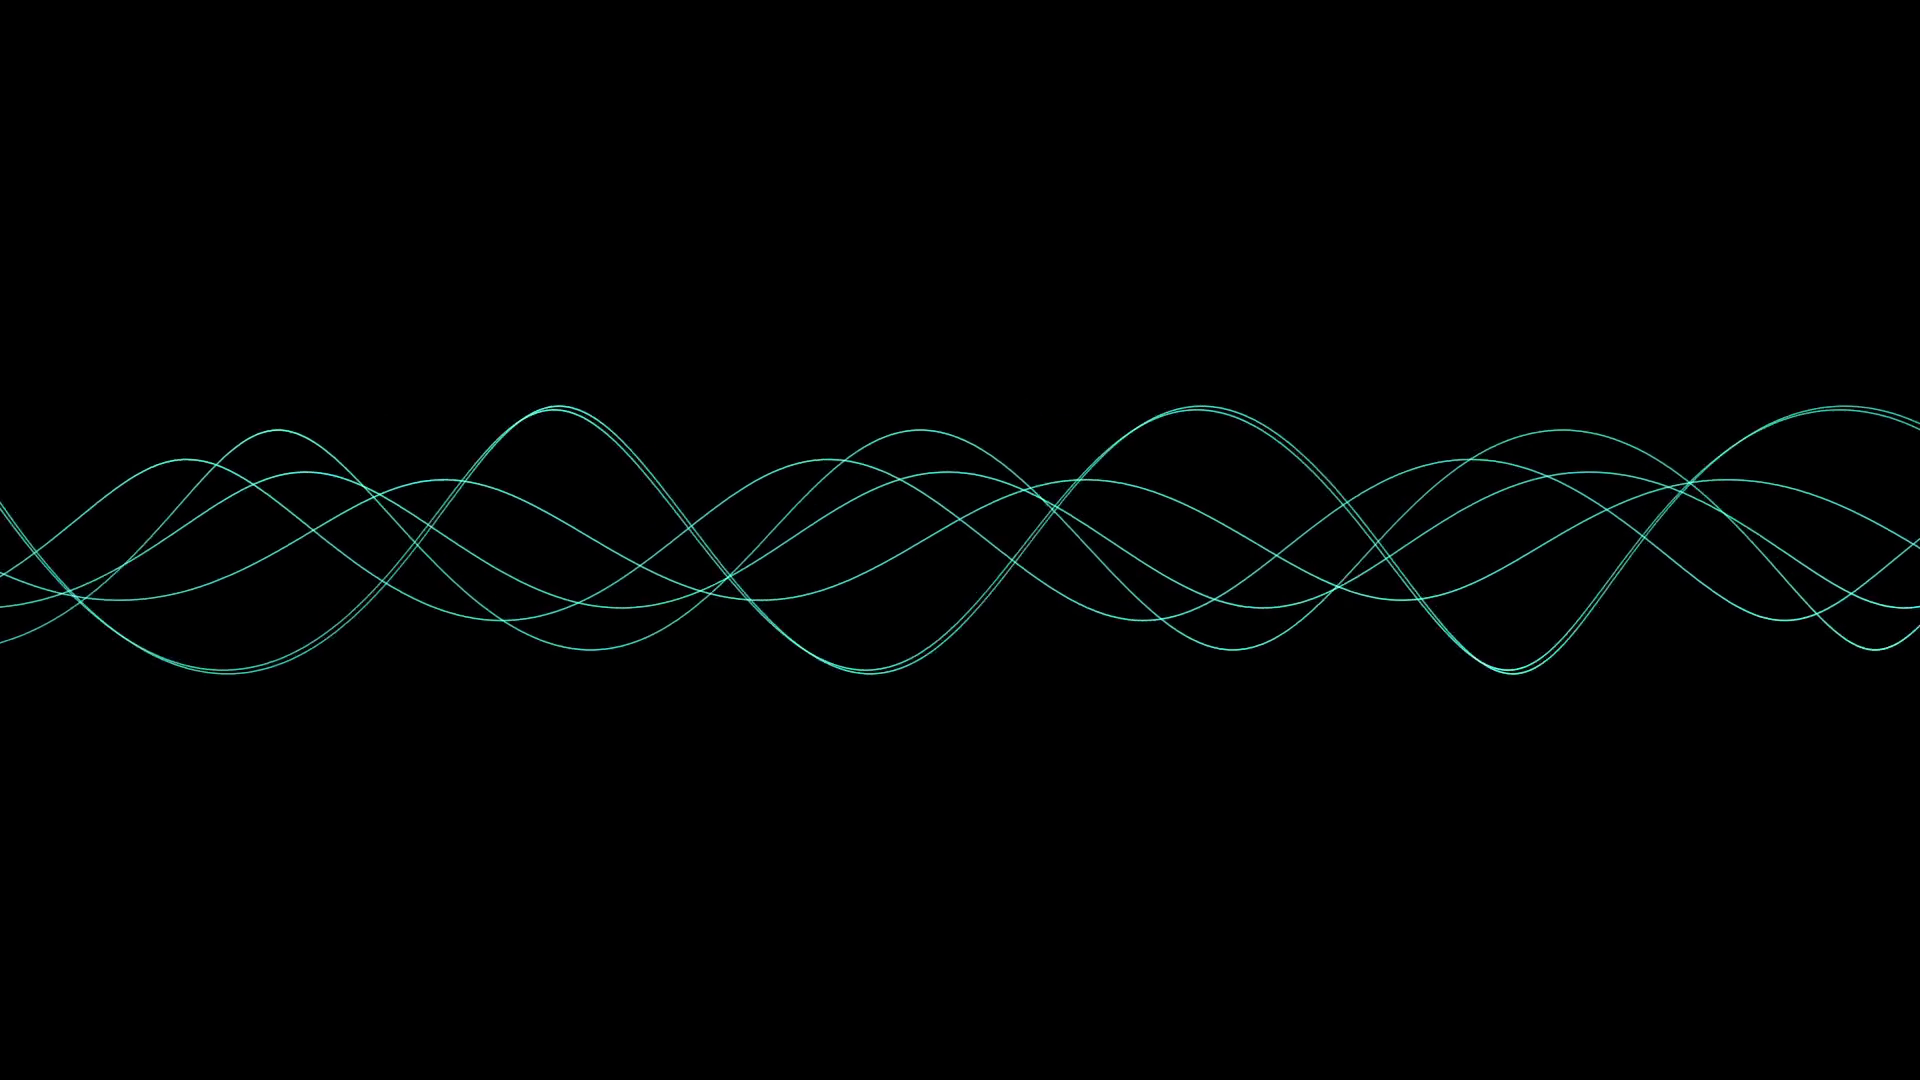 General 1920x1080 black background digital art minimalism waves sound radar abstract